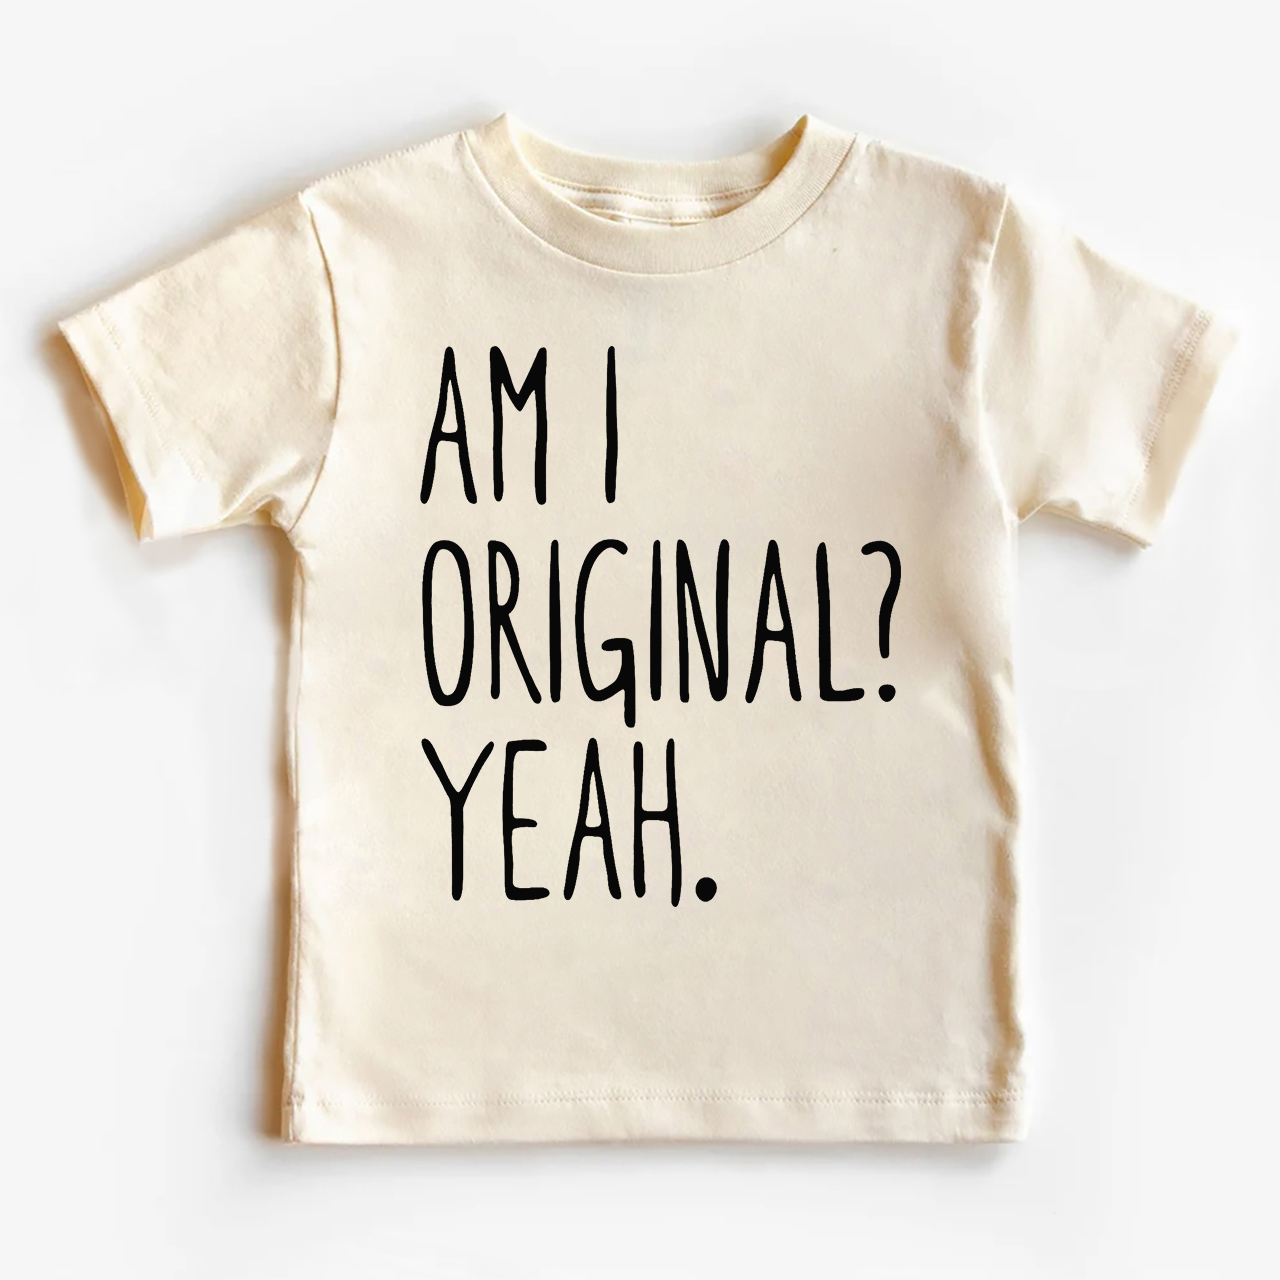 Am I Original? Yeah. Kids Shirt